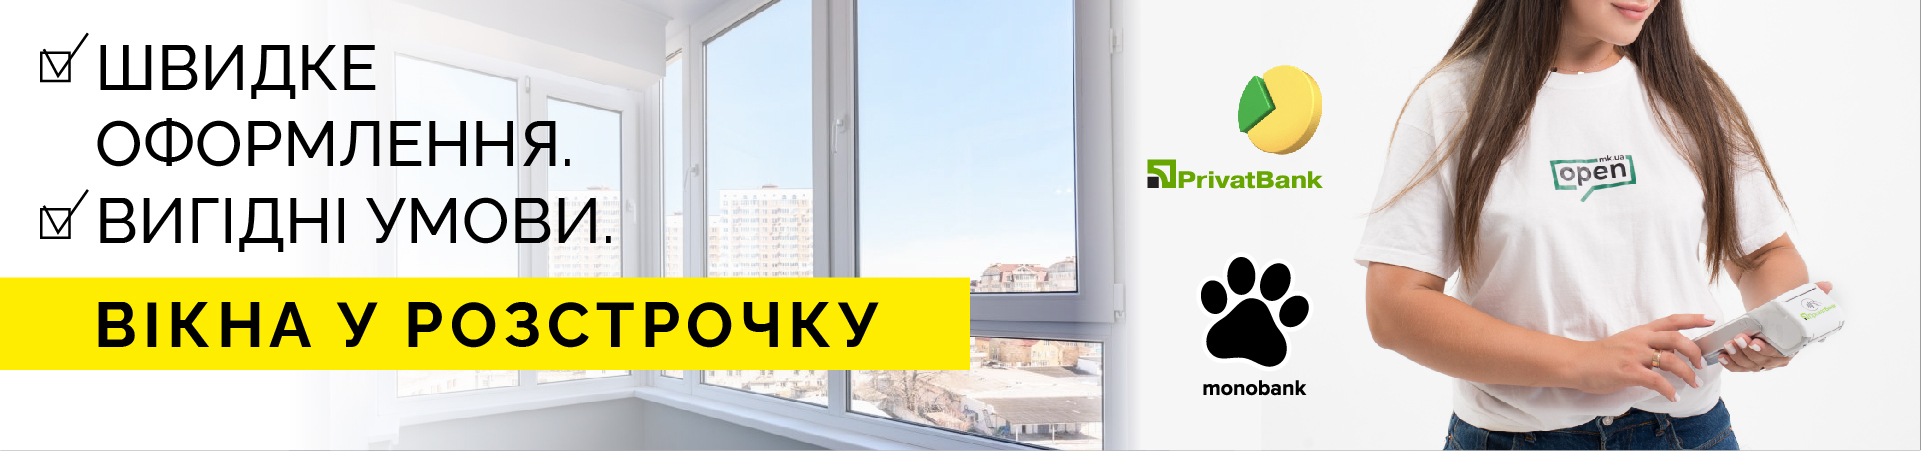 OPEN - вікна, двері, фурнітура в місті Миколаїв Open